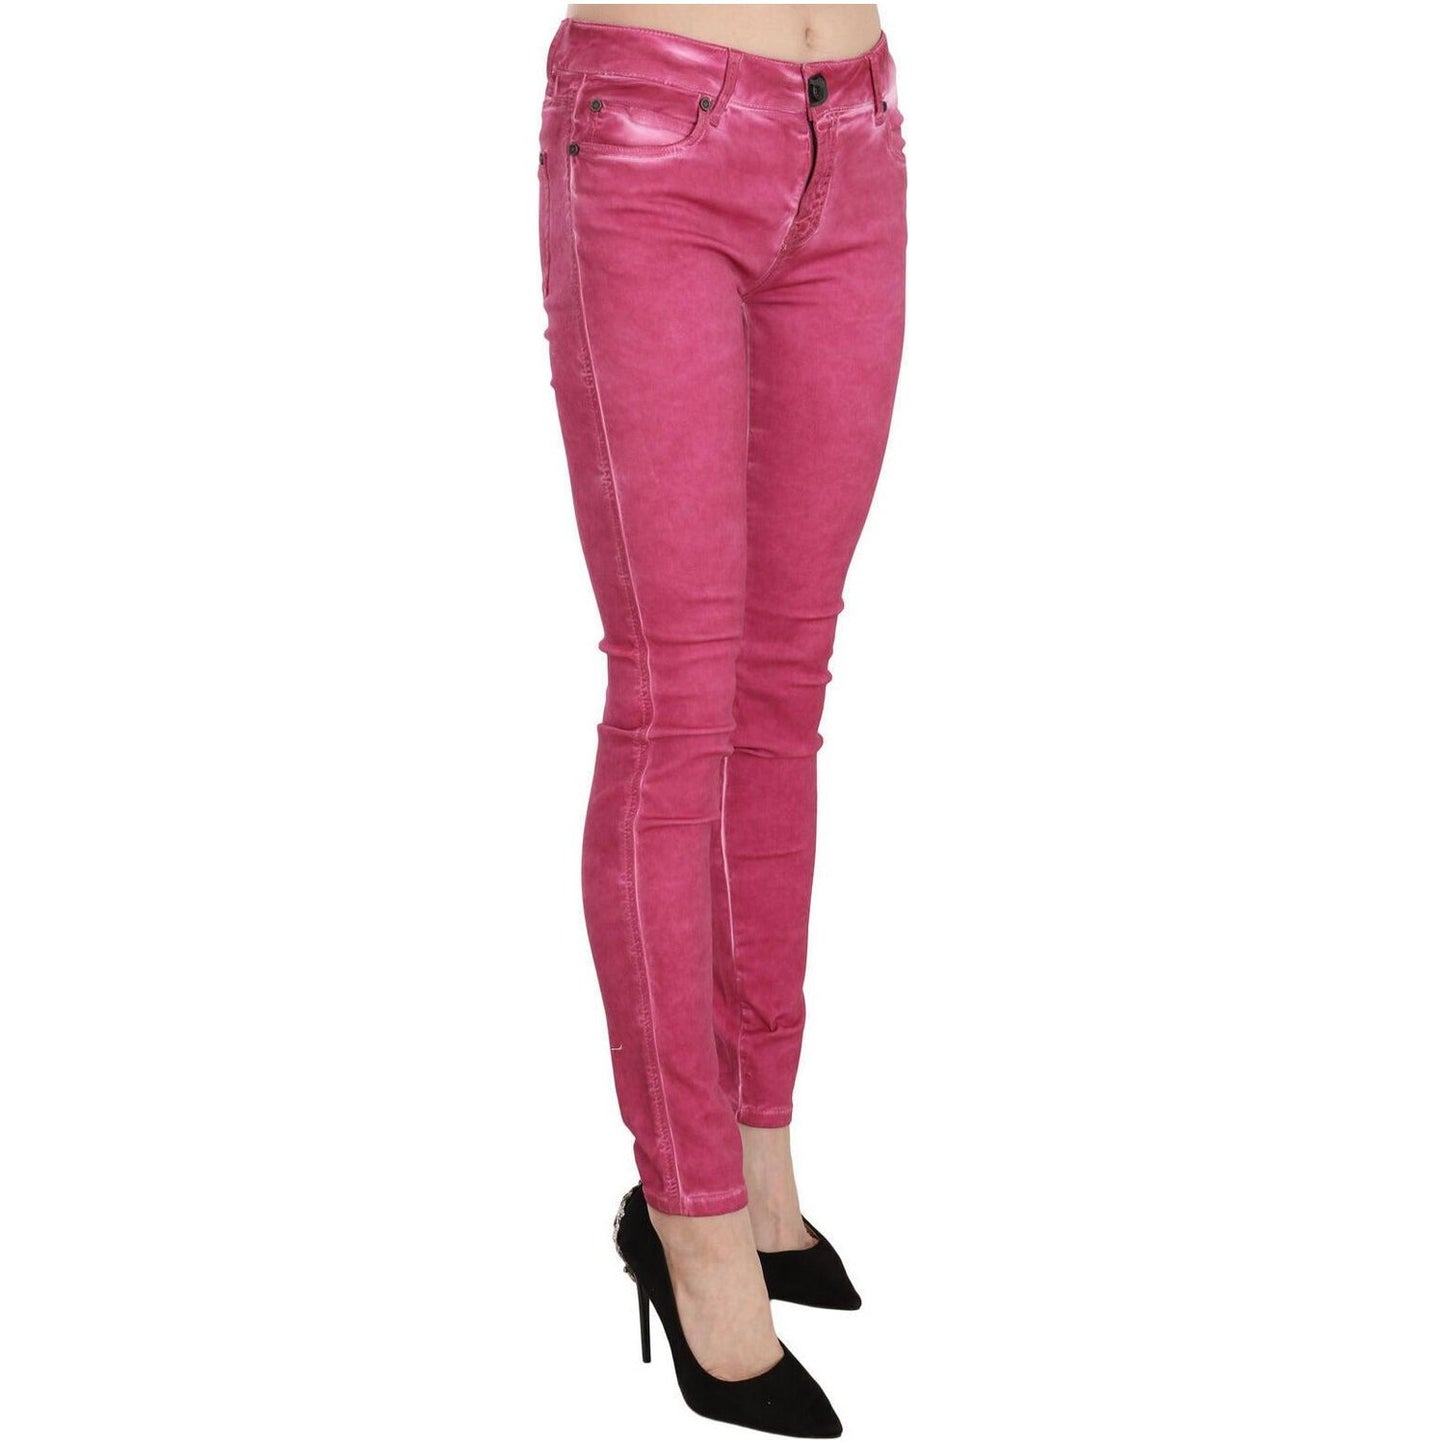 Dolce & Gabbana Chic Pink Mid Waist Skinny Pants Jeans & Pants pink-velvet-mid-waist-skinny-trouser-pants